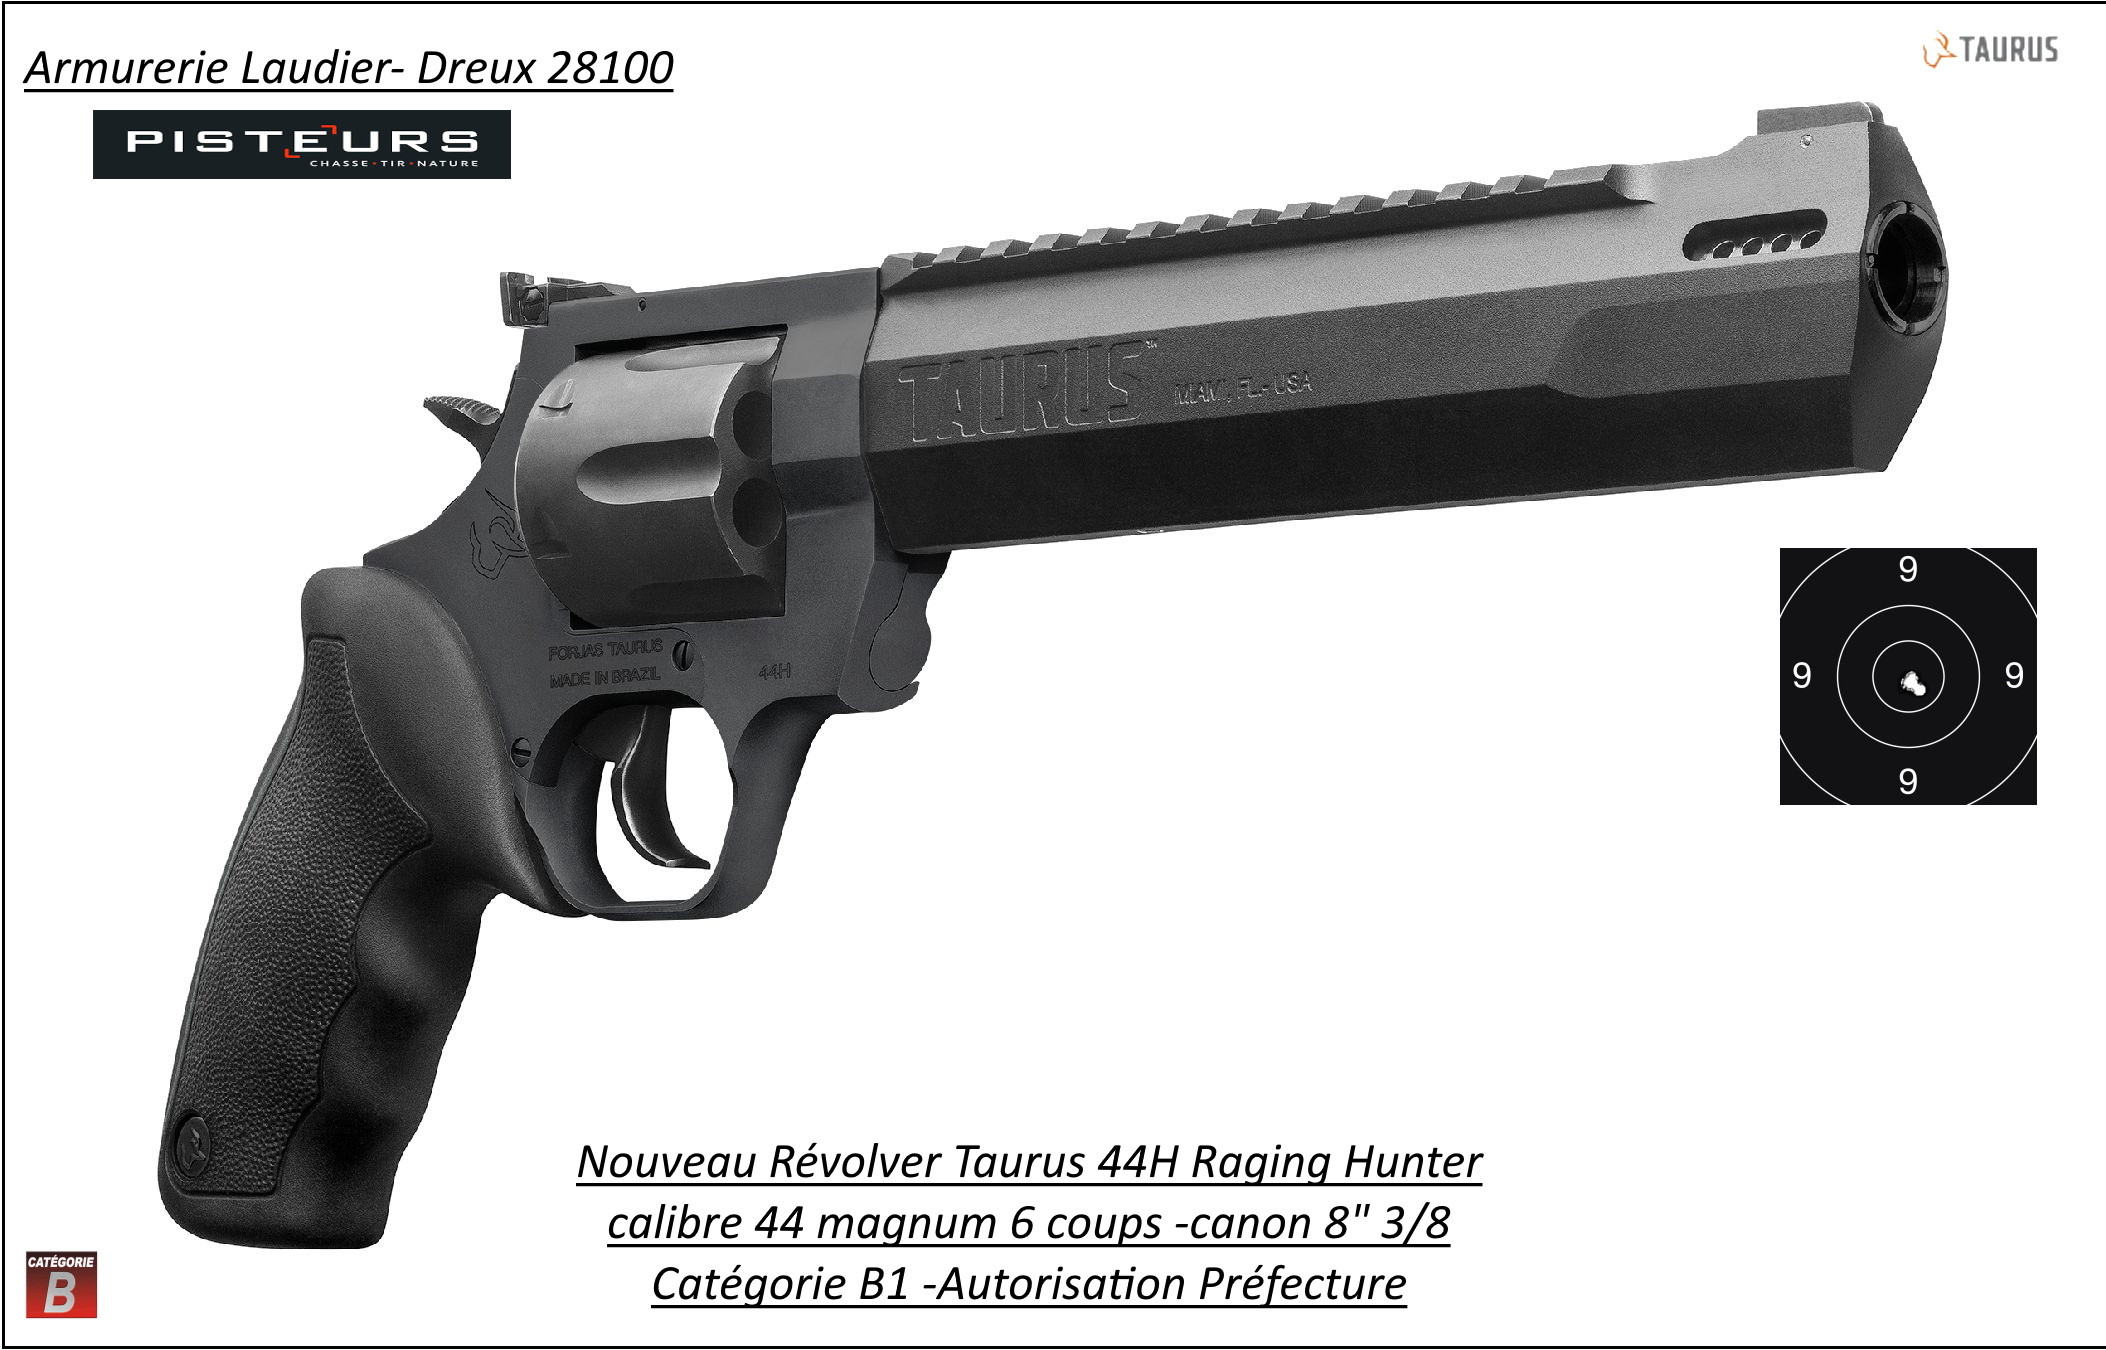 Revolver Taurus Raging Hunter 44H Calibre 44 mag bronzé  canon 8" 3/8 -Catégorie B1-Promotion-Autorisation-Préfectorale-B1-Ref taurus-512211